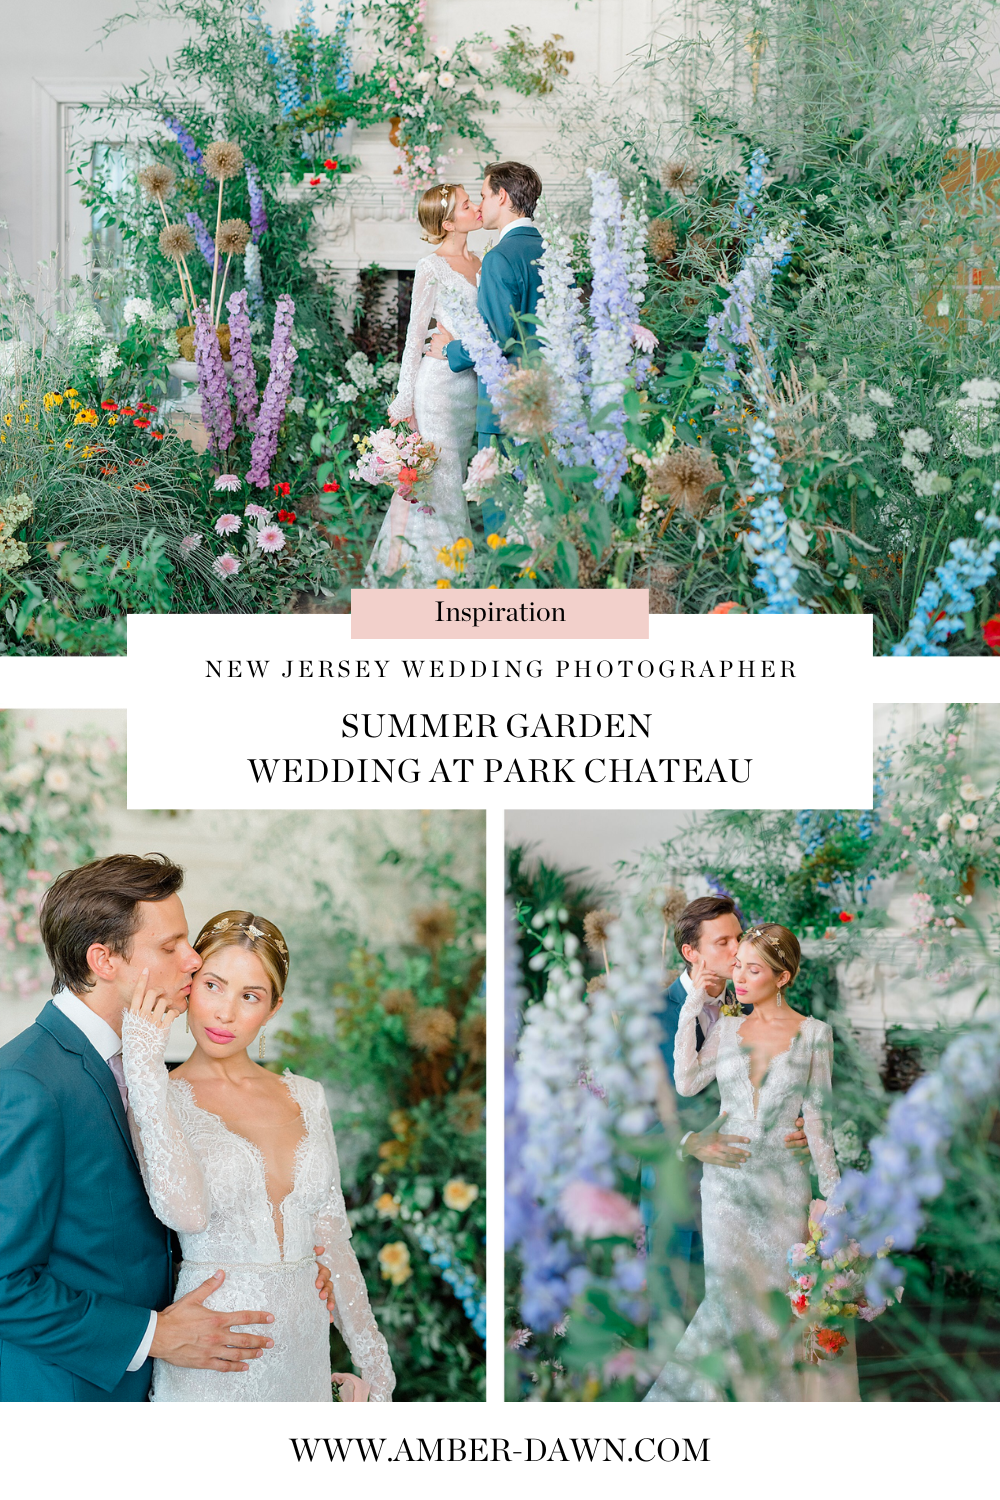 Summer Garden Wedding at Park Chateau in East Brunswick, NJ